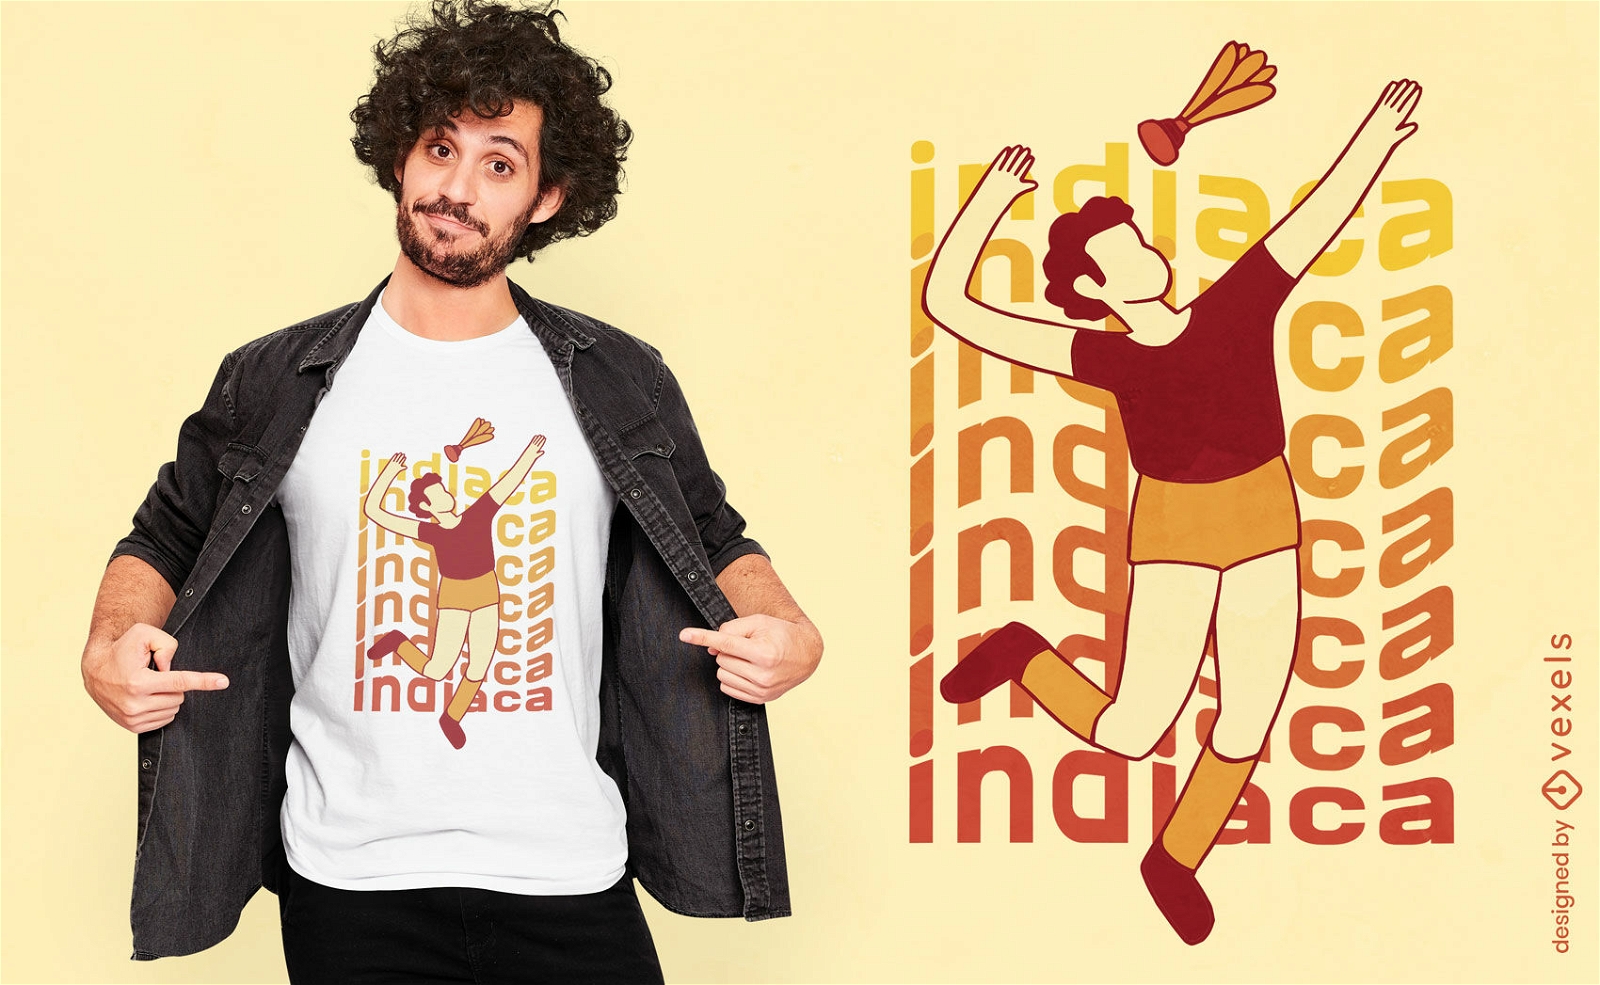 Indiaca player t-shirt design